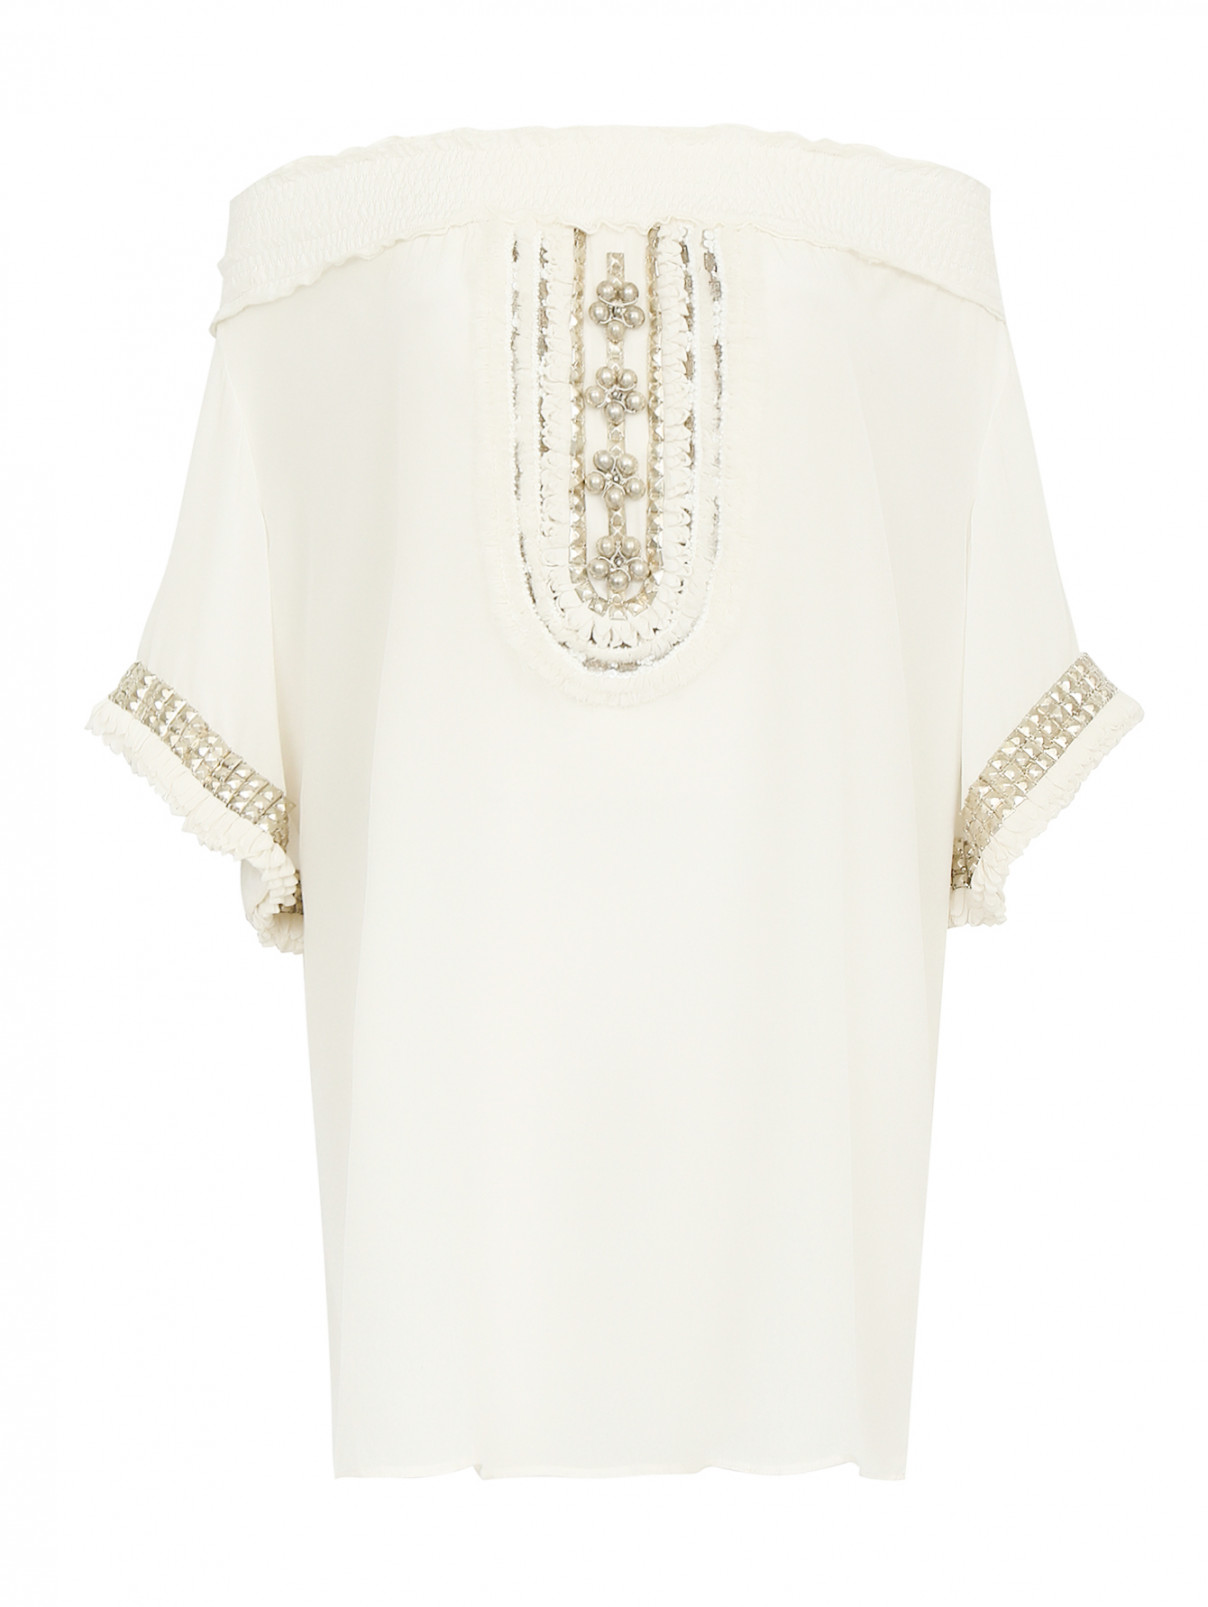 Блуза из шелка с металлической фурнитурой Maurizio Pecoraro  –  Общий вид  – Цвет:  Белый